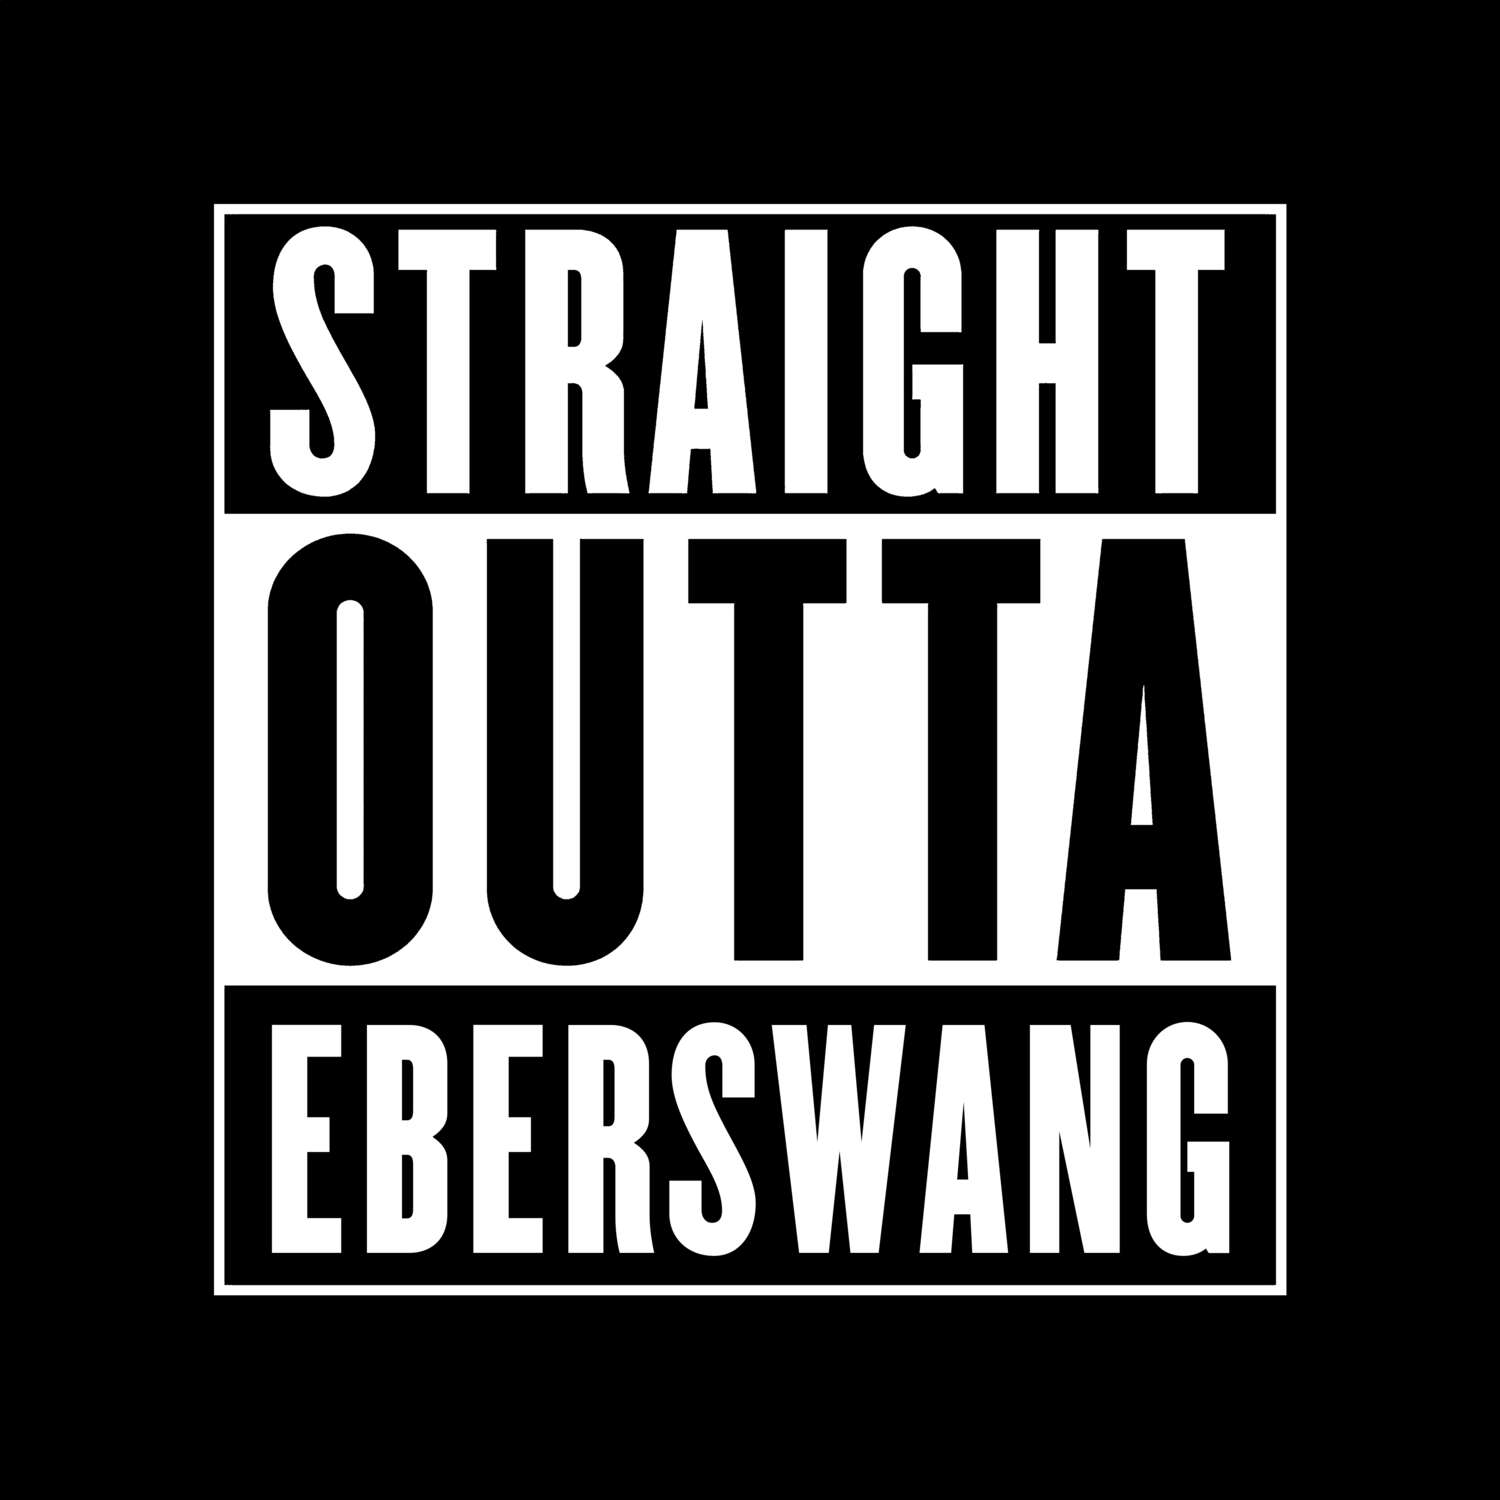 Eberswang T-Shirt »Straight Outta«